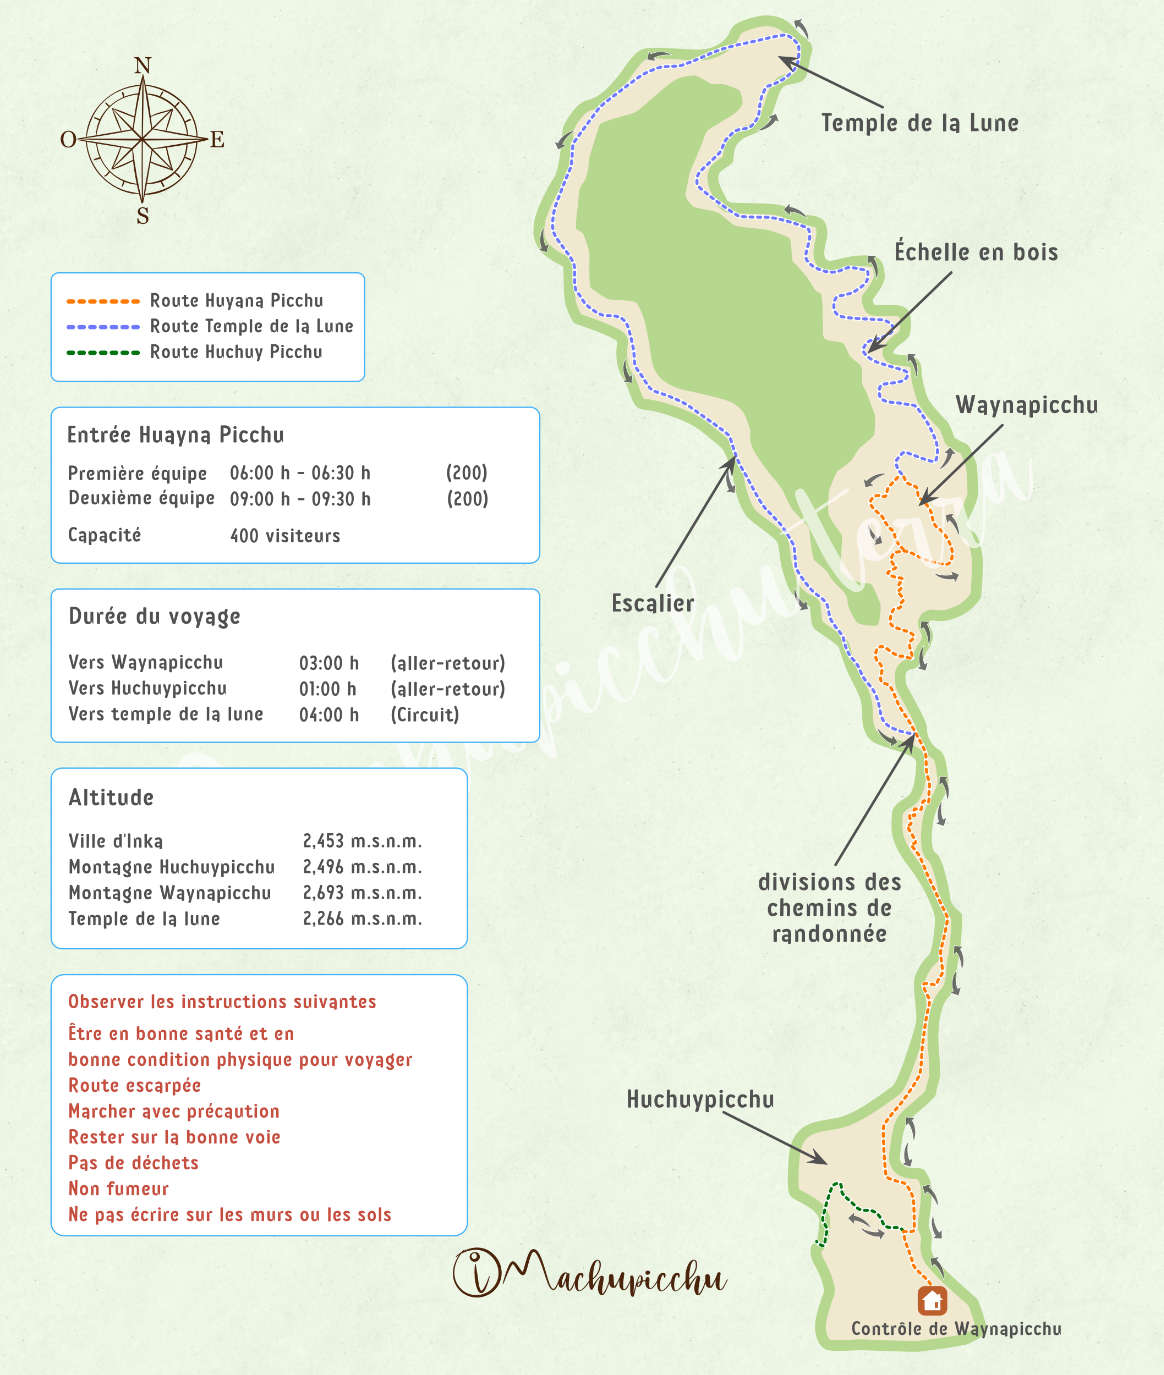 Plan d'accès à la montagne Huayna Picchu